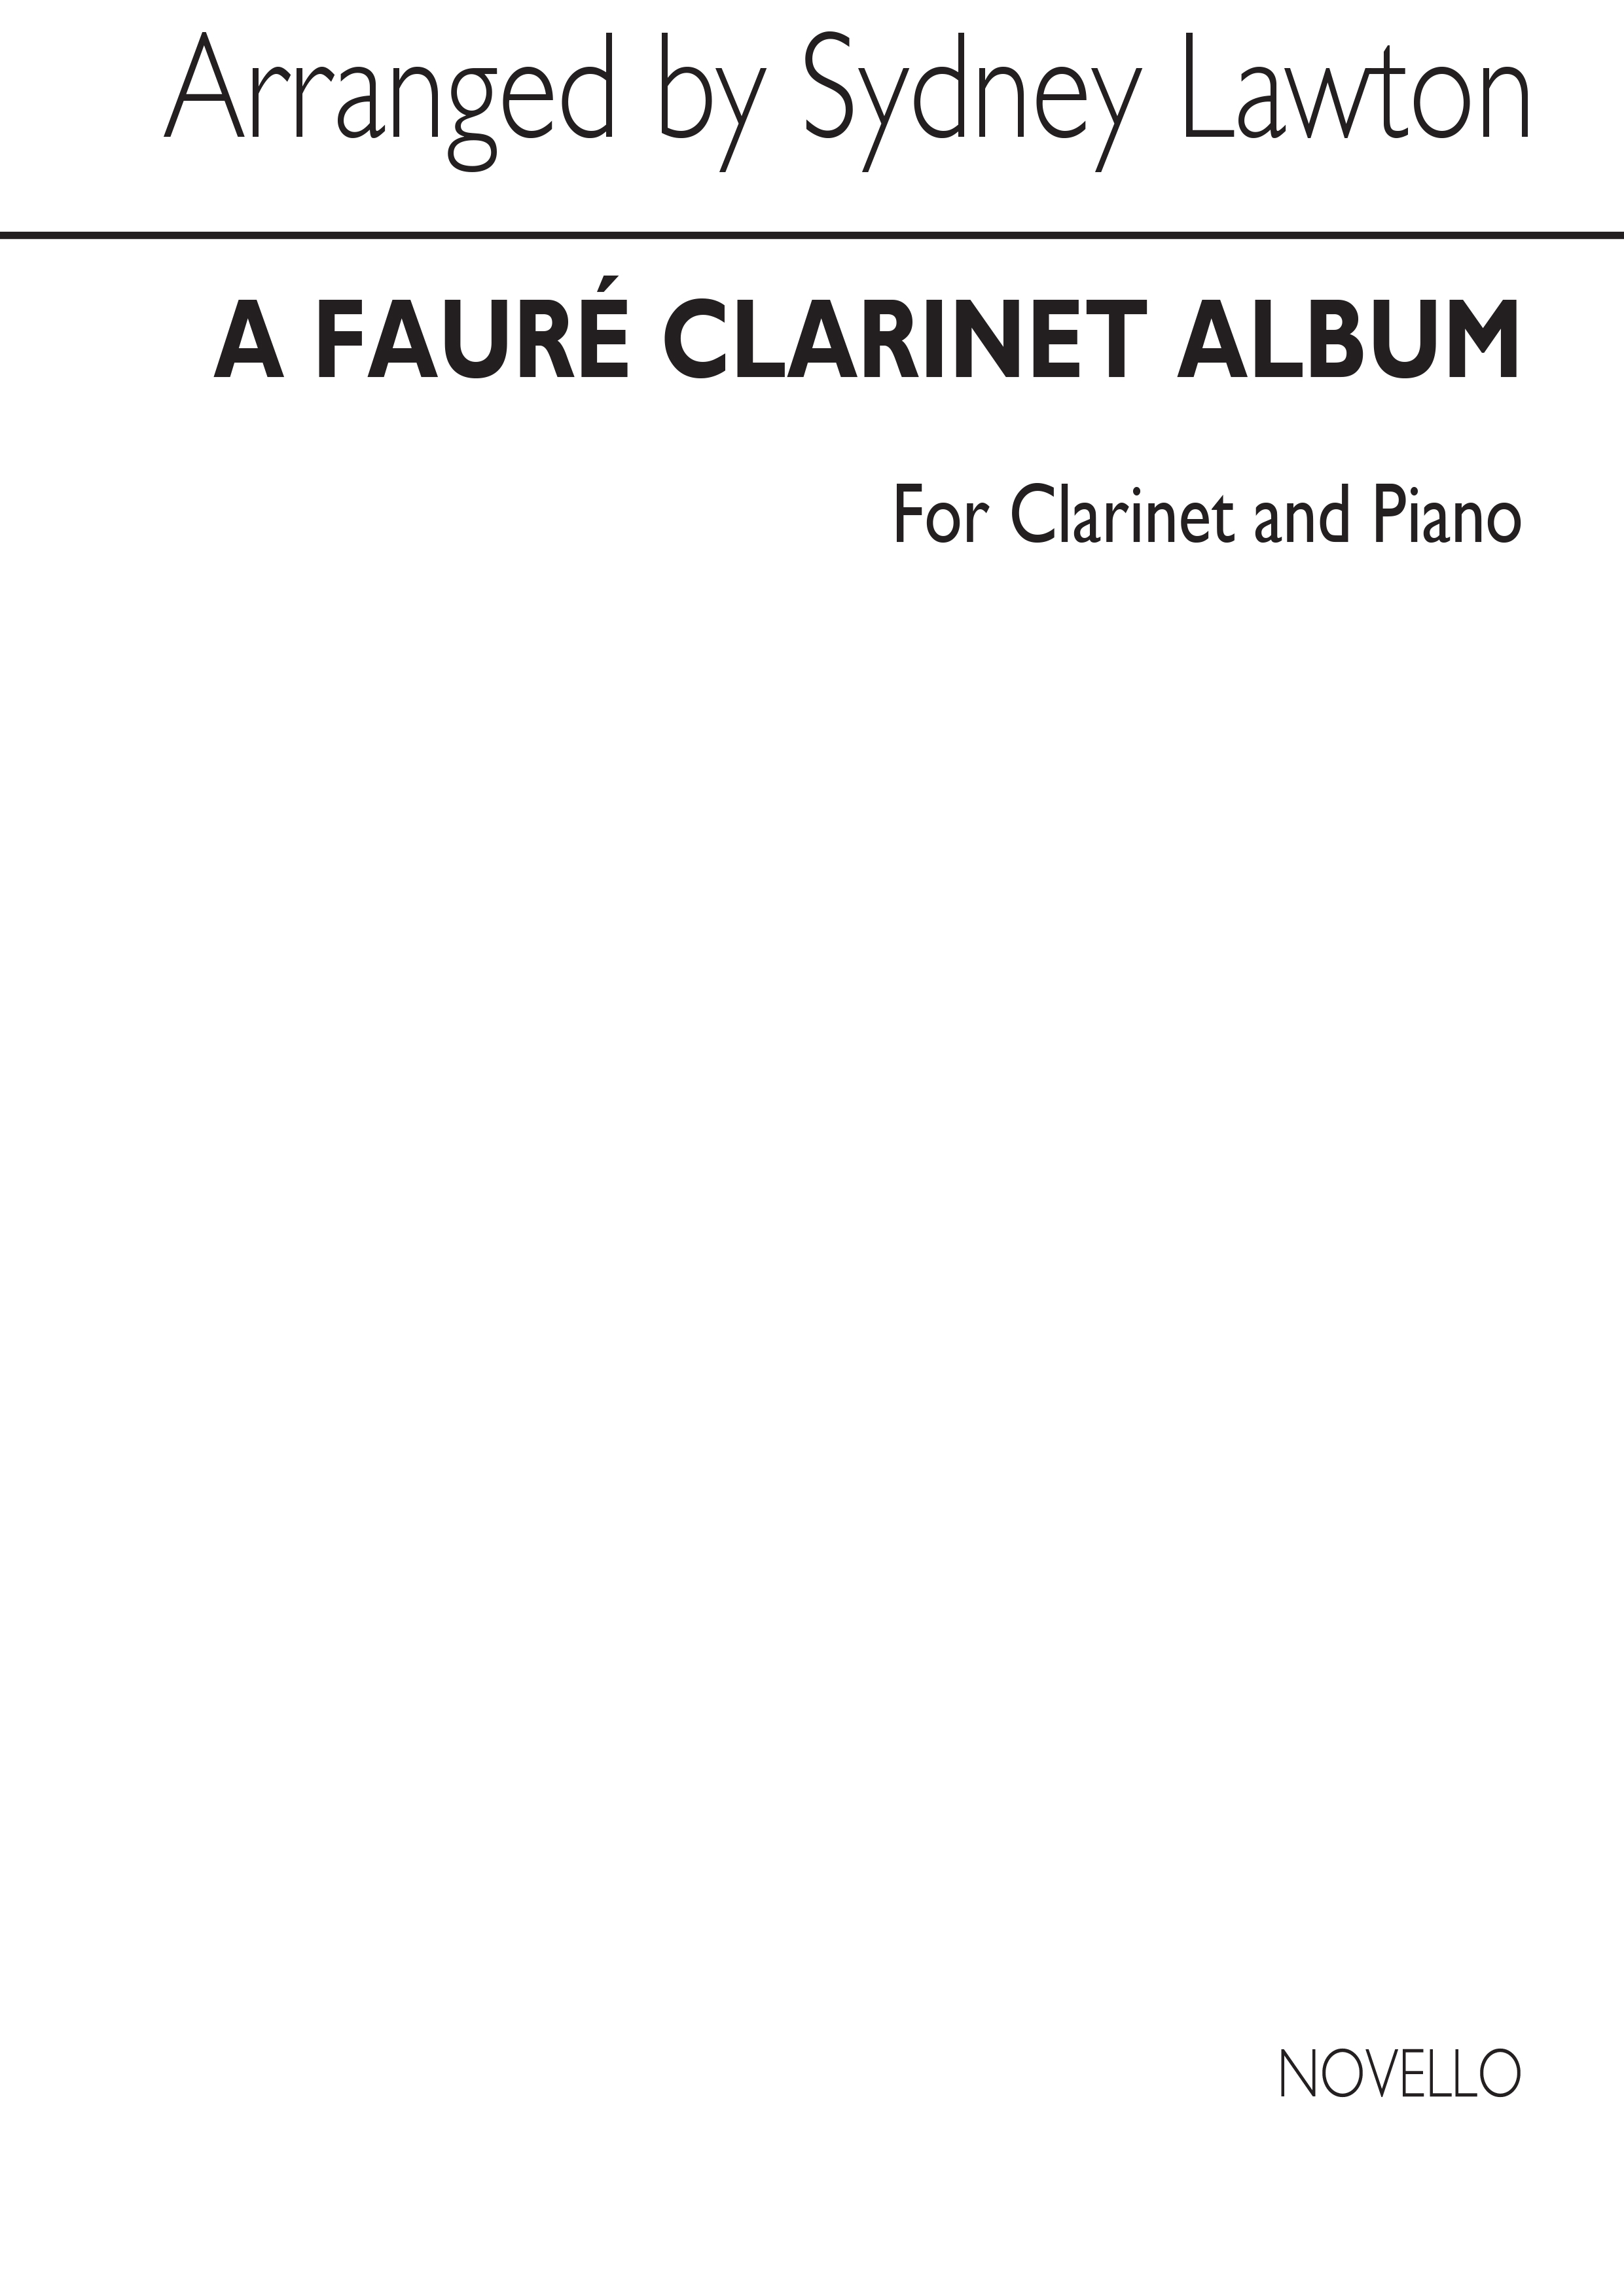 A Faure Clarinet Album